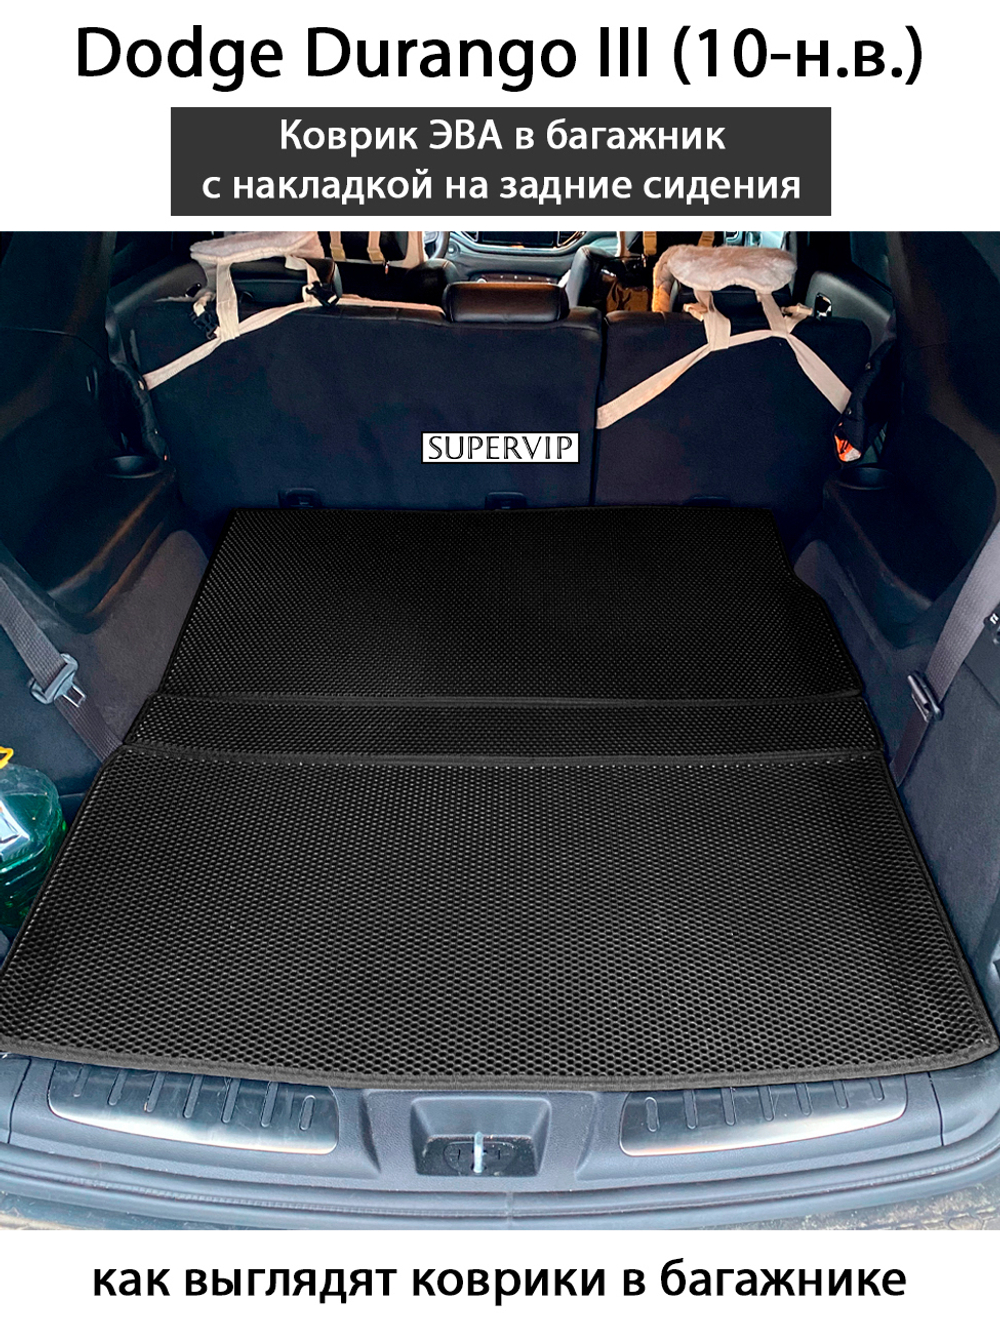 коврик eva в багажник с накладкой на задние сидения для Dodge Durango III от supervip